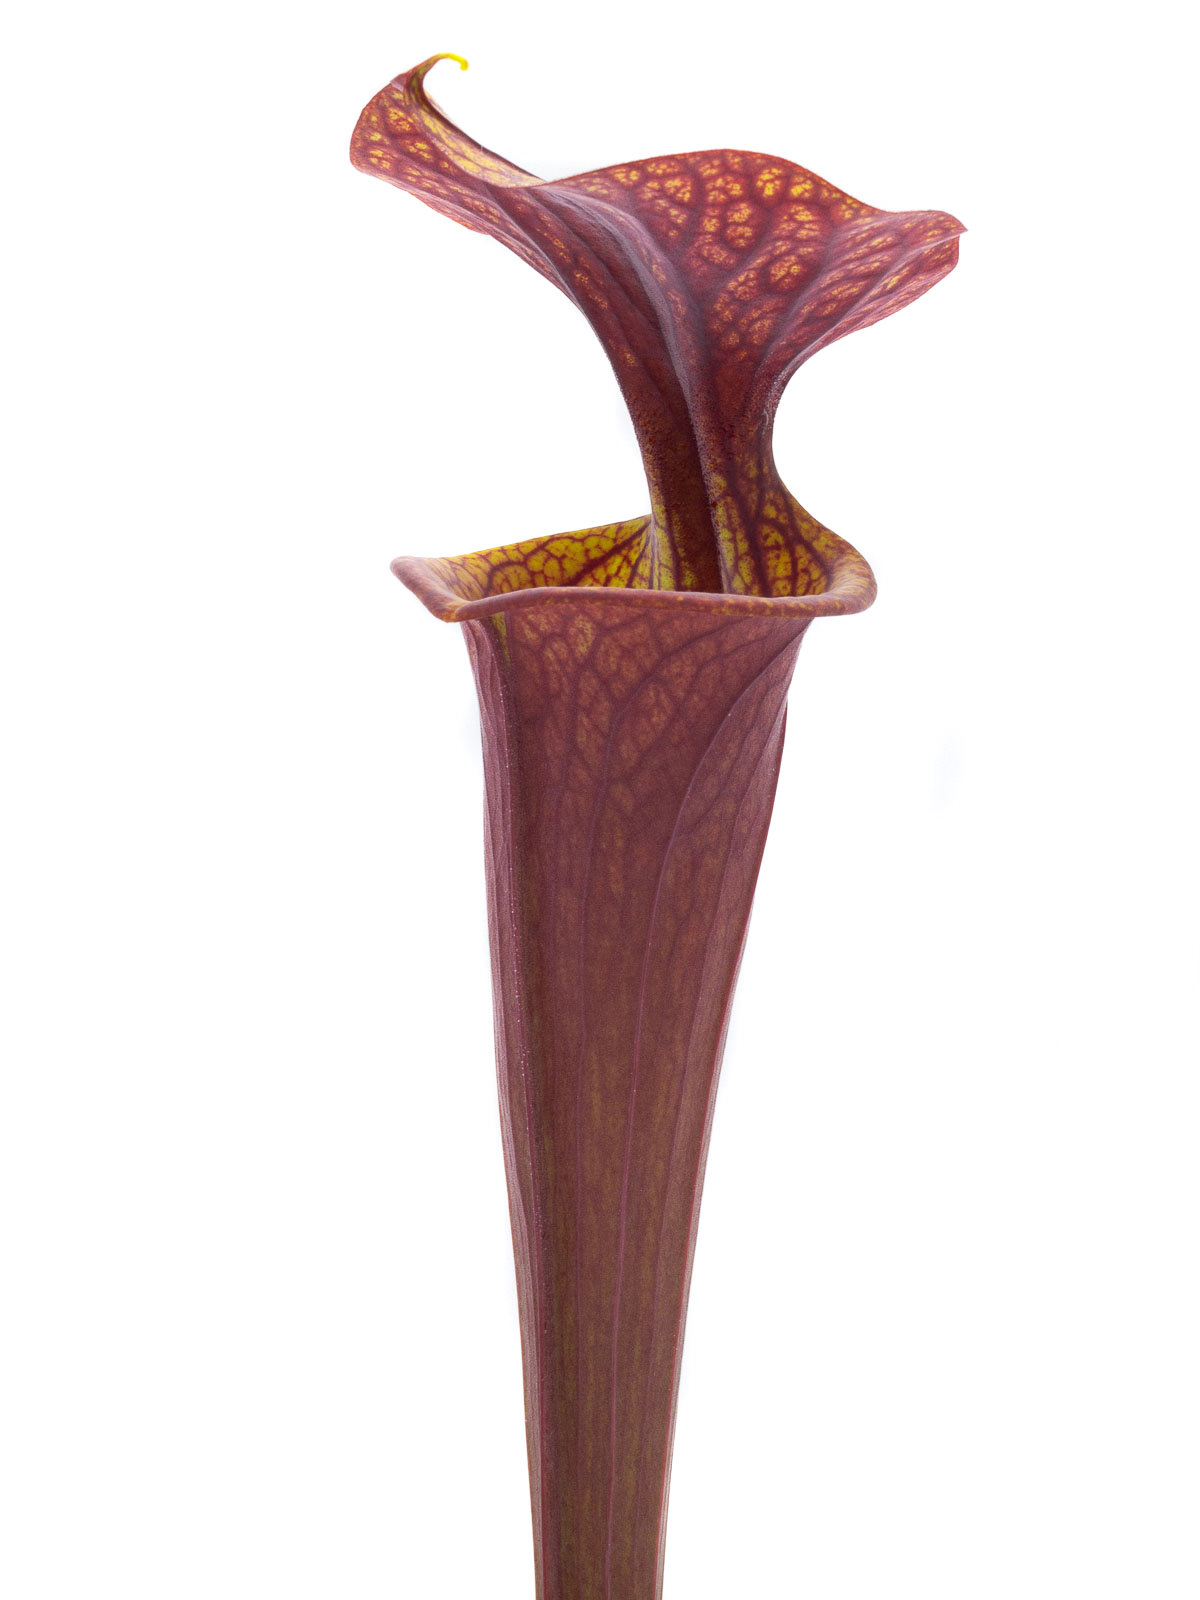 Sarracenia flava var. ornata - MK F47, heavy veined, reddish form